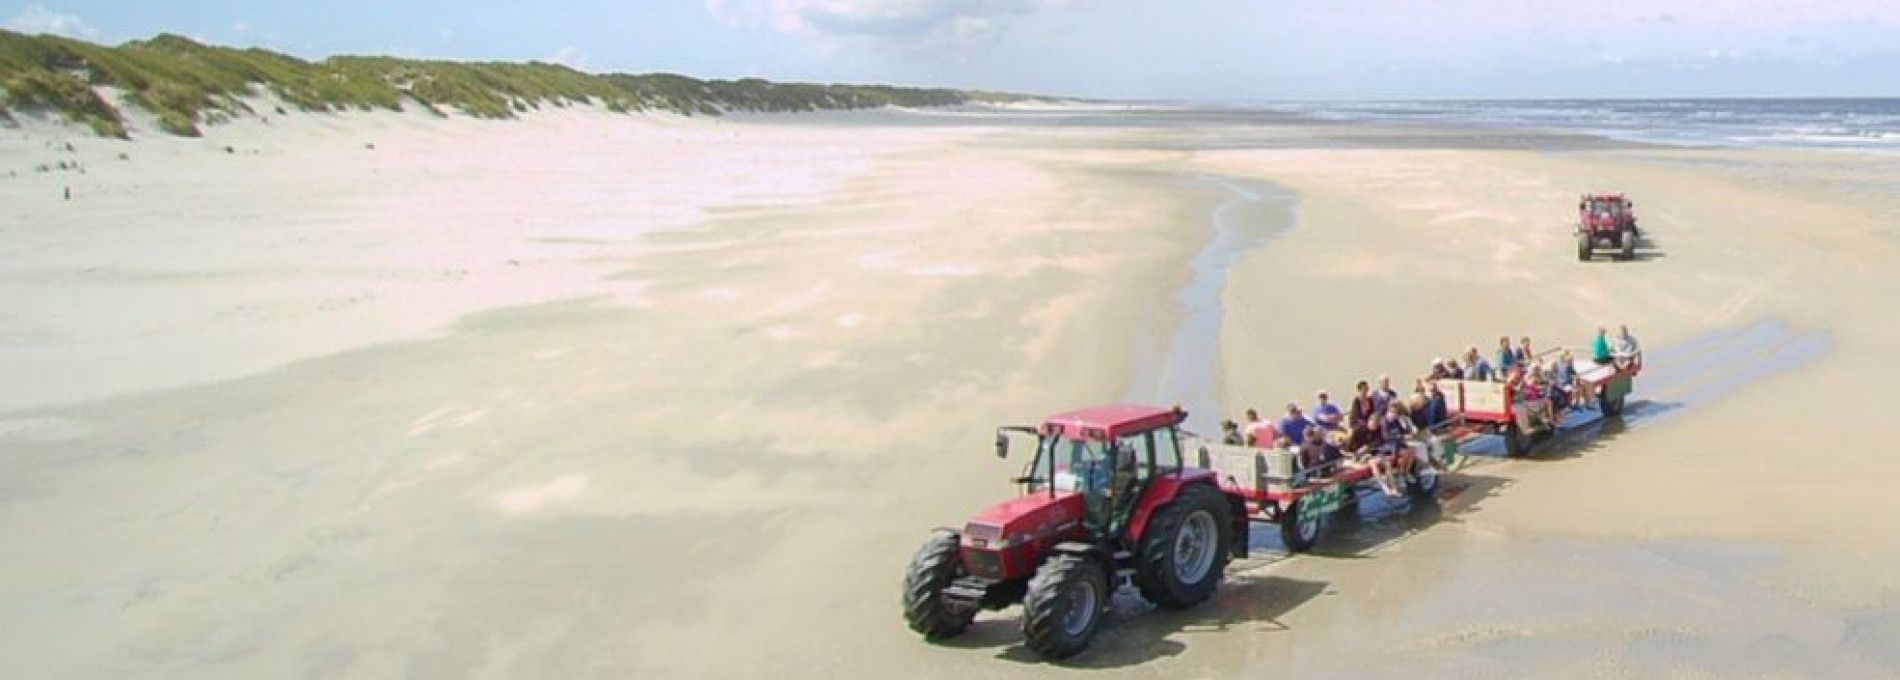 Tractor beachtrip -Tourist Information 